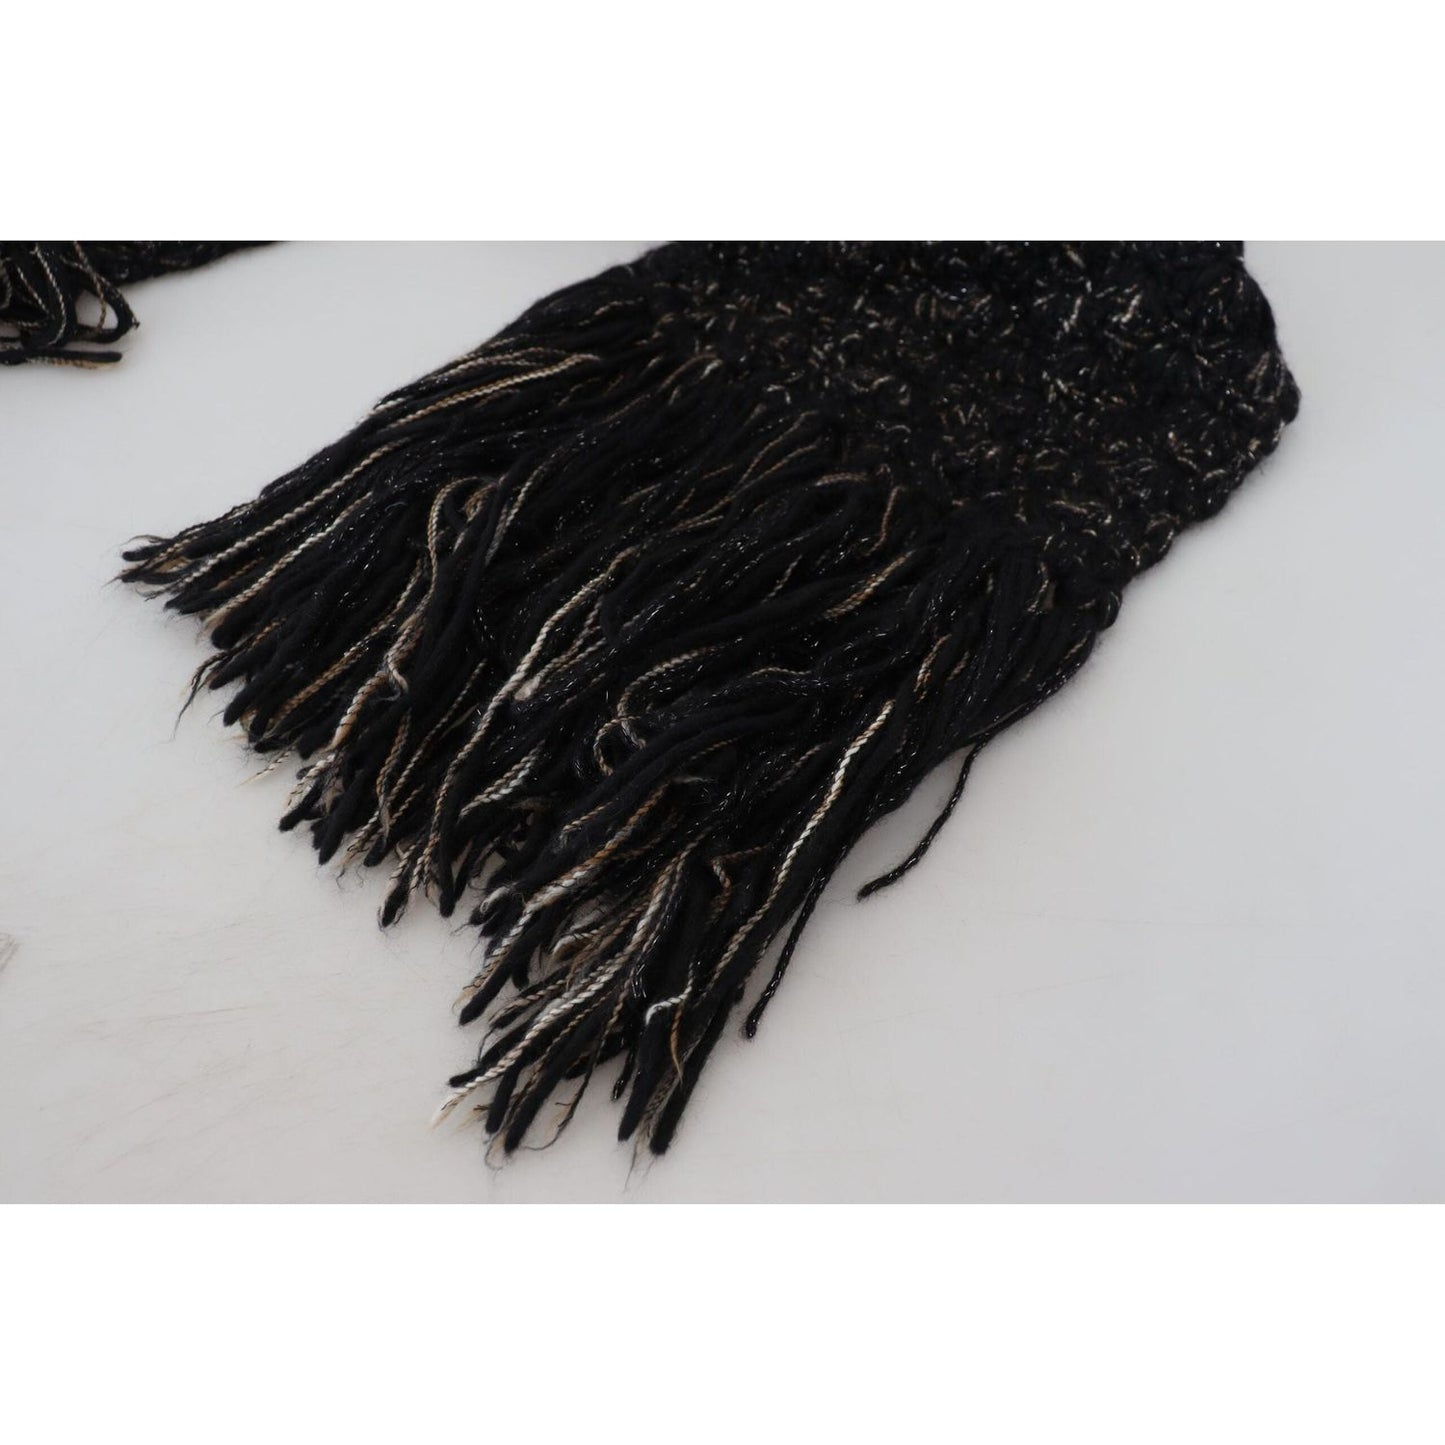 Dolce & Gabbana Elegant Virgin Wool Blend Black Scarf black-wool-knitted-wrap-foulard-fringe-scarf